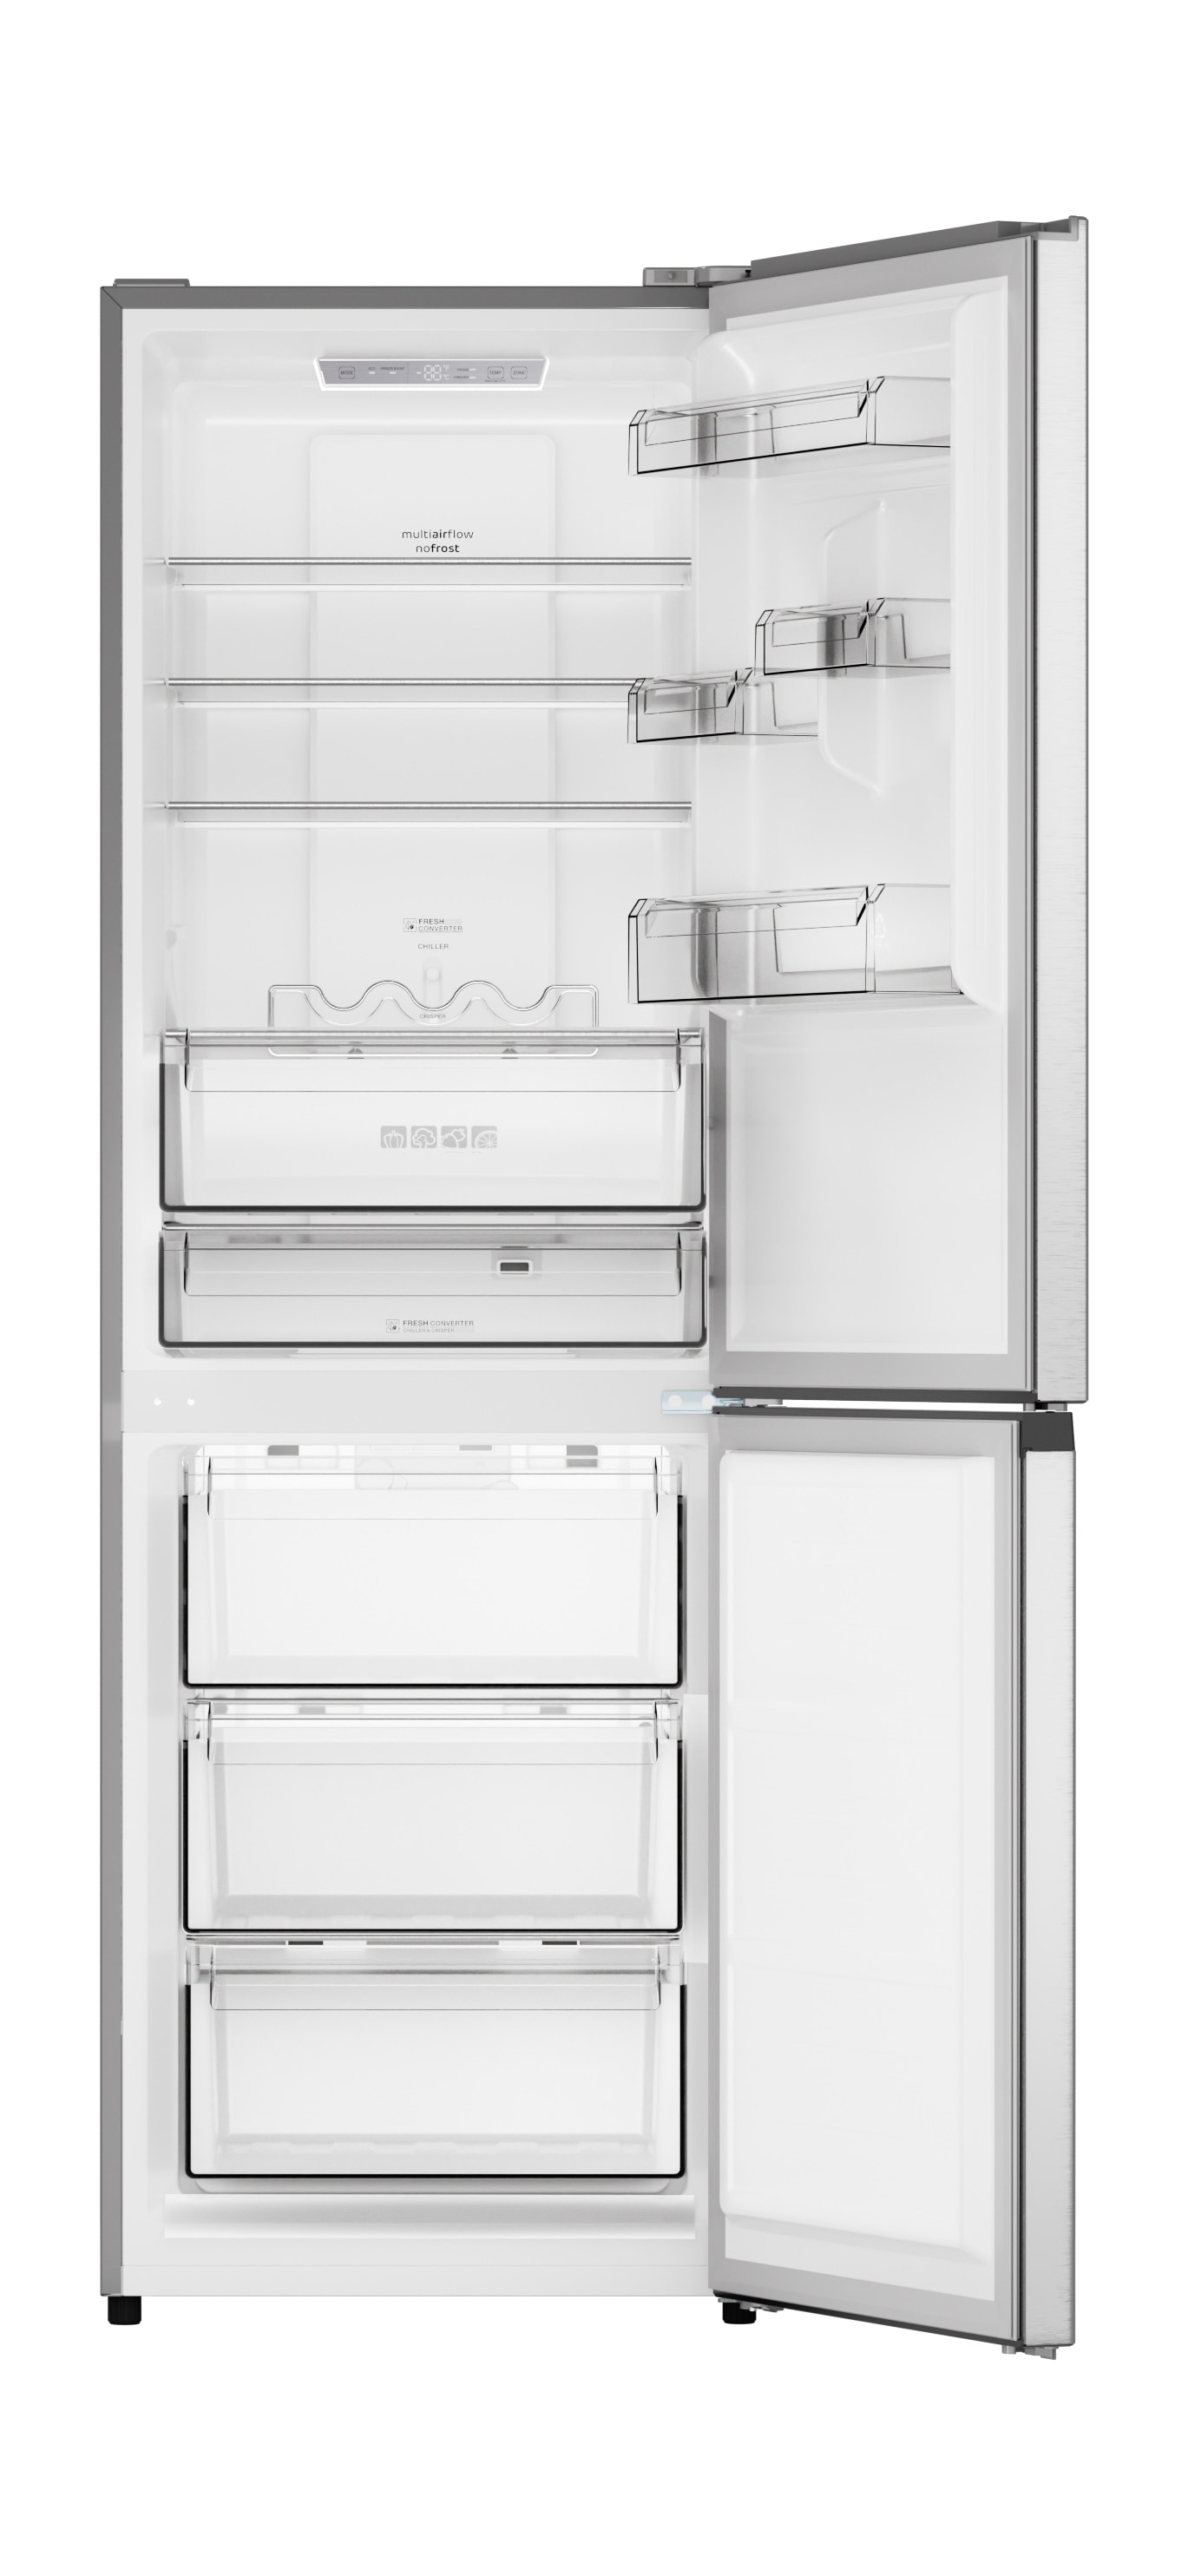 Steel) Refrigerator Refrigerators Bottom-Freezer the Bottom-Freezer at (Stainless 11.5-cu STAR department ENERGY Sharp ft in